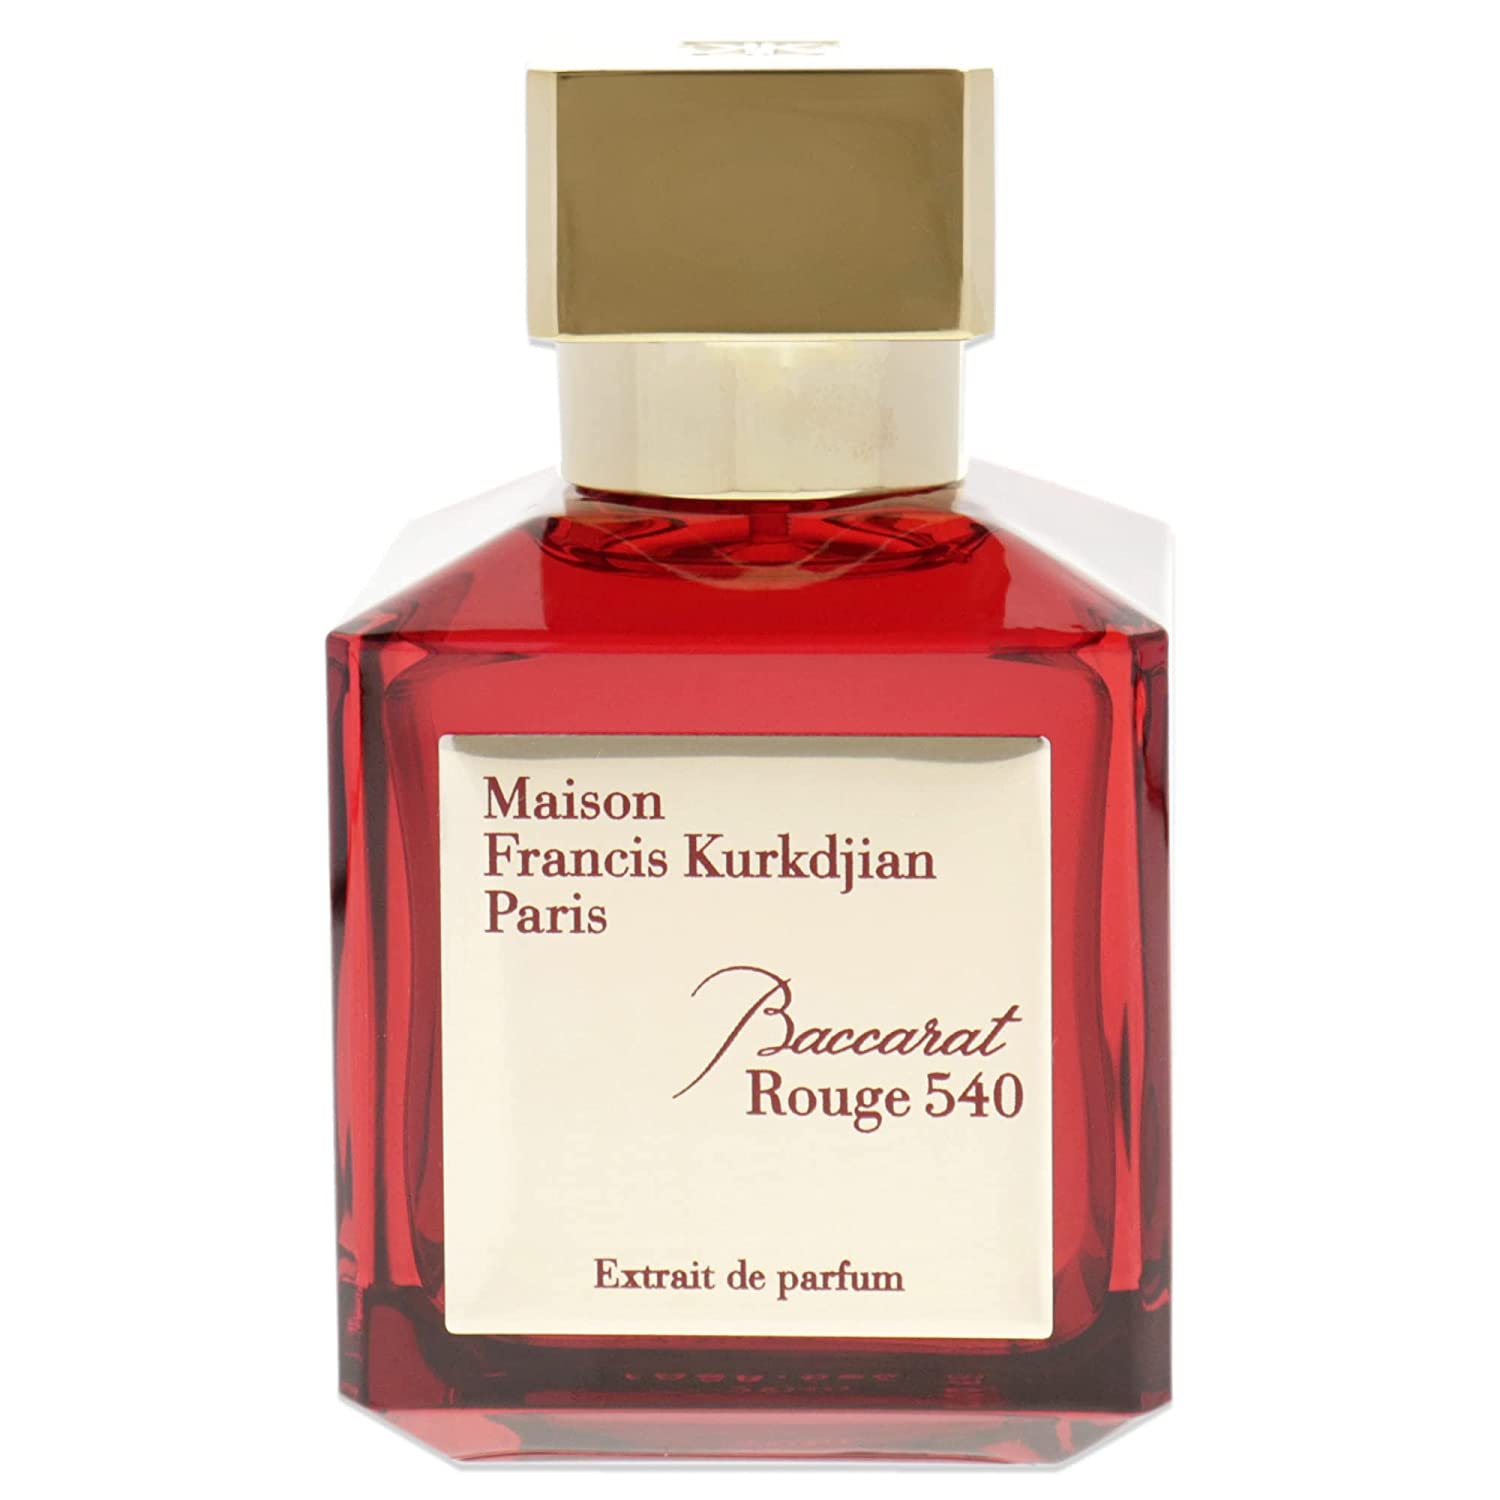 Maison Francis Kurkdjian Paris Baccarat Rouge 540 - 2.3 fl oz